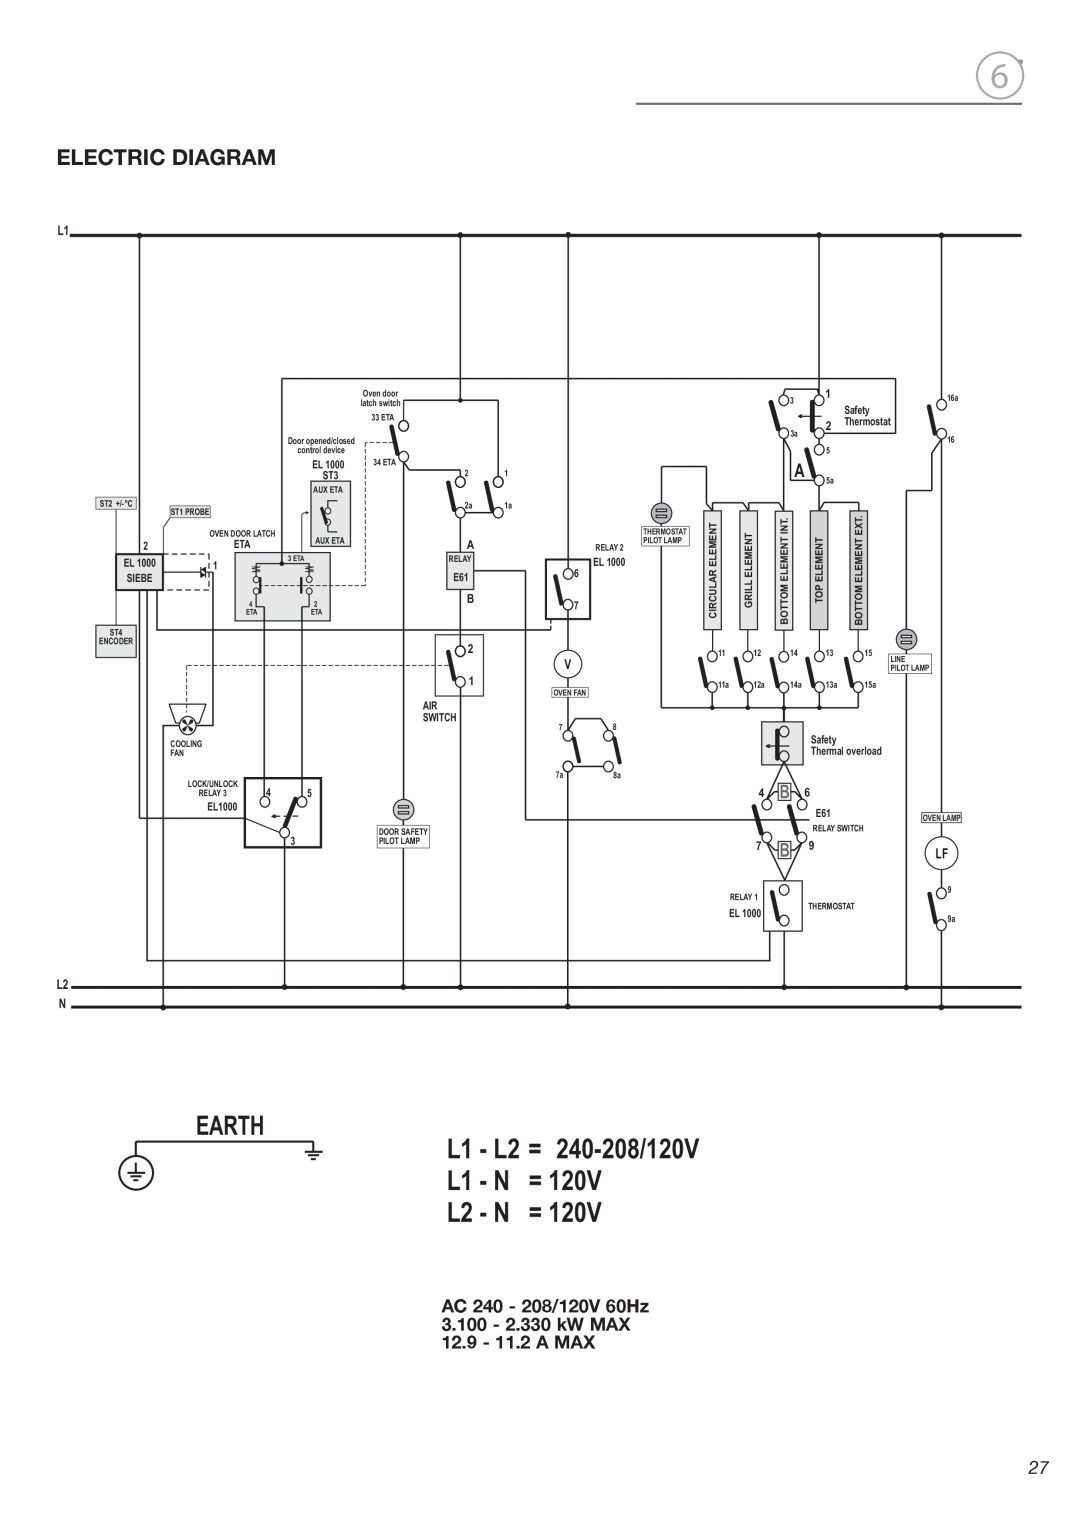 Fisher & Paykel OB24SDPX L1 - N, L2 - N, Electric Diagram, L1 - L2 = 240-208/120V, Earth, AC 240 - 208/120V 60Hz, Safety 